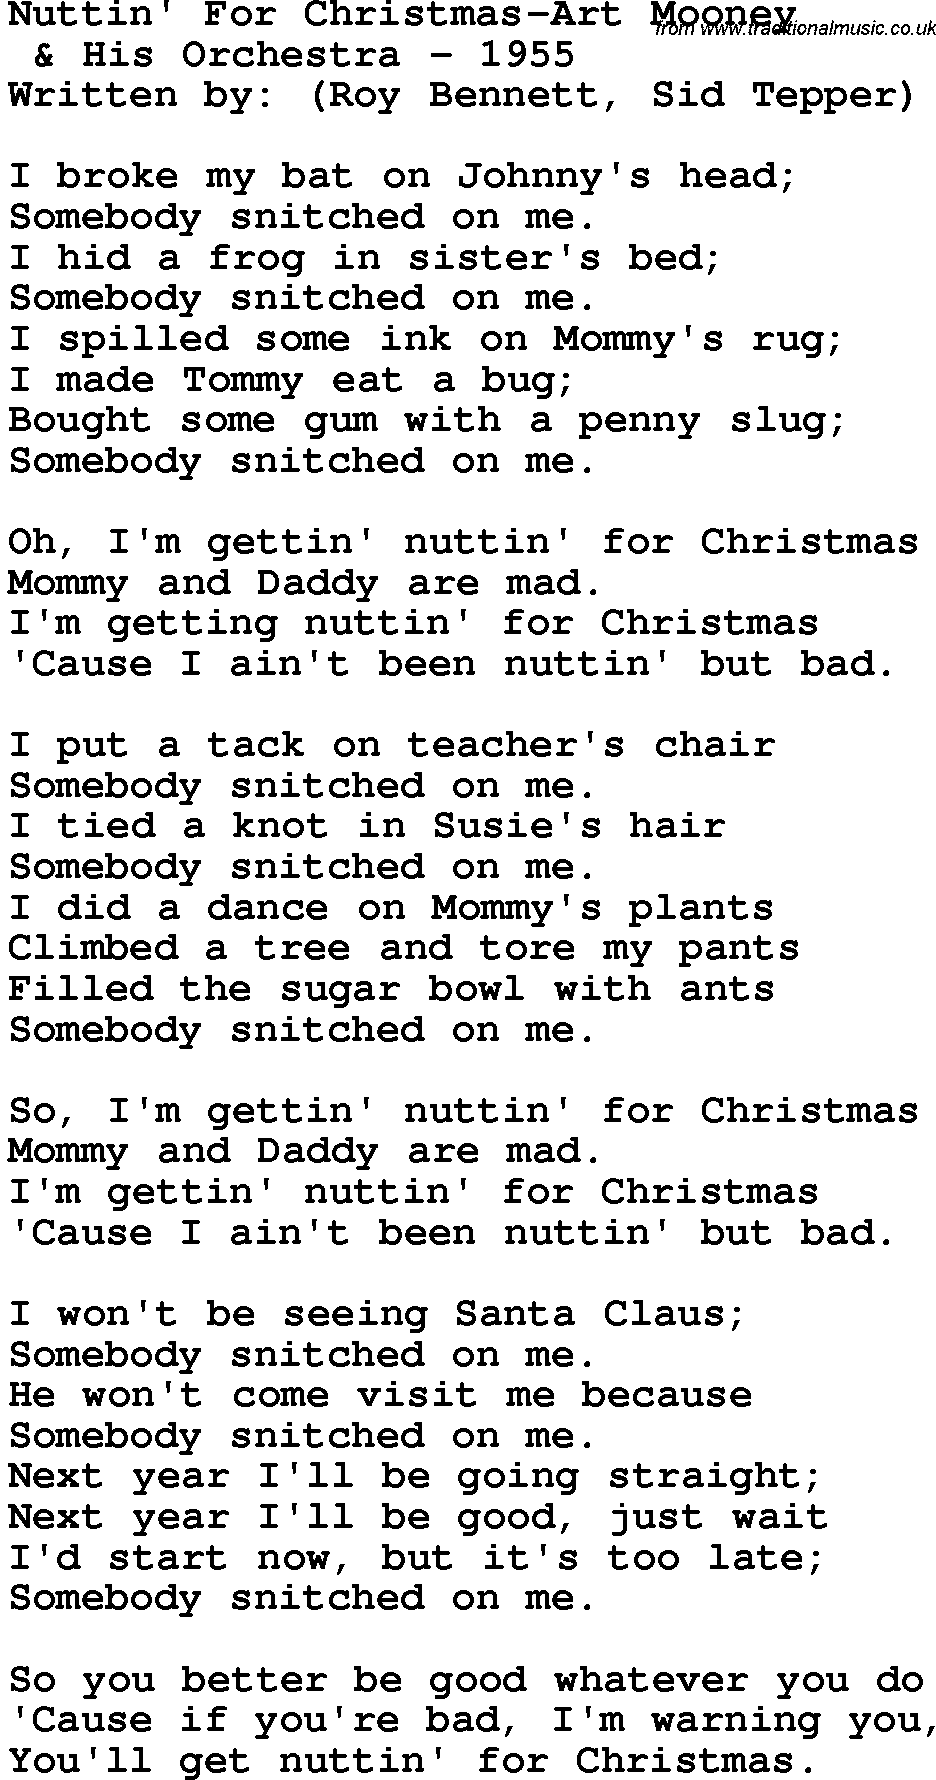 Novelty song: Nuttin' For Christmas-Art Mooney lyrics